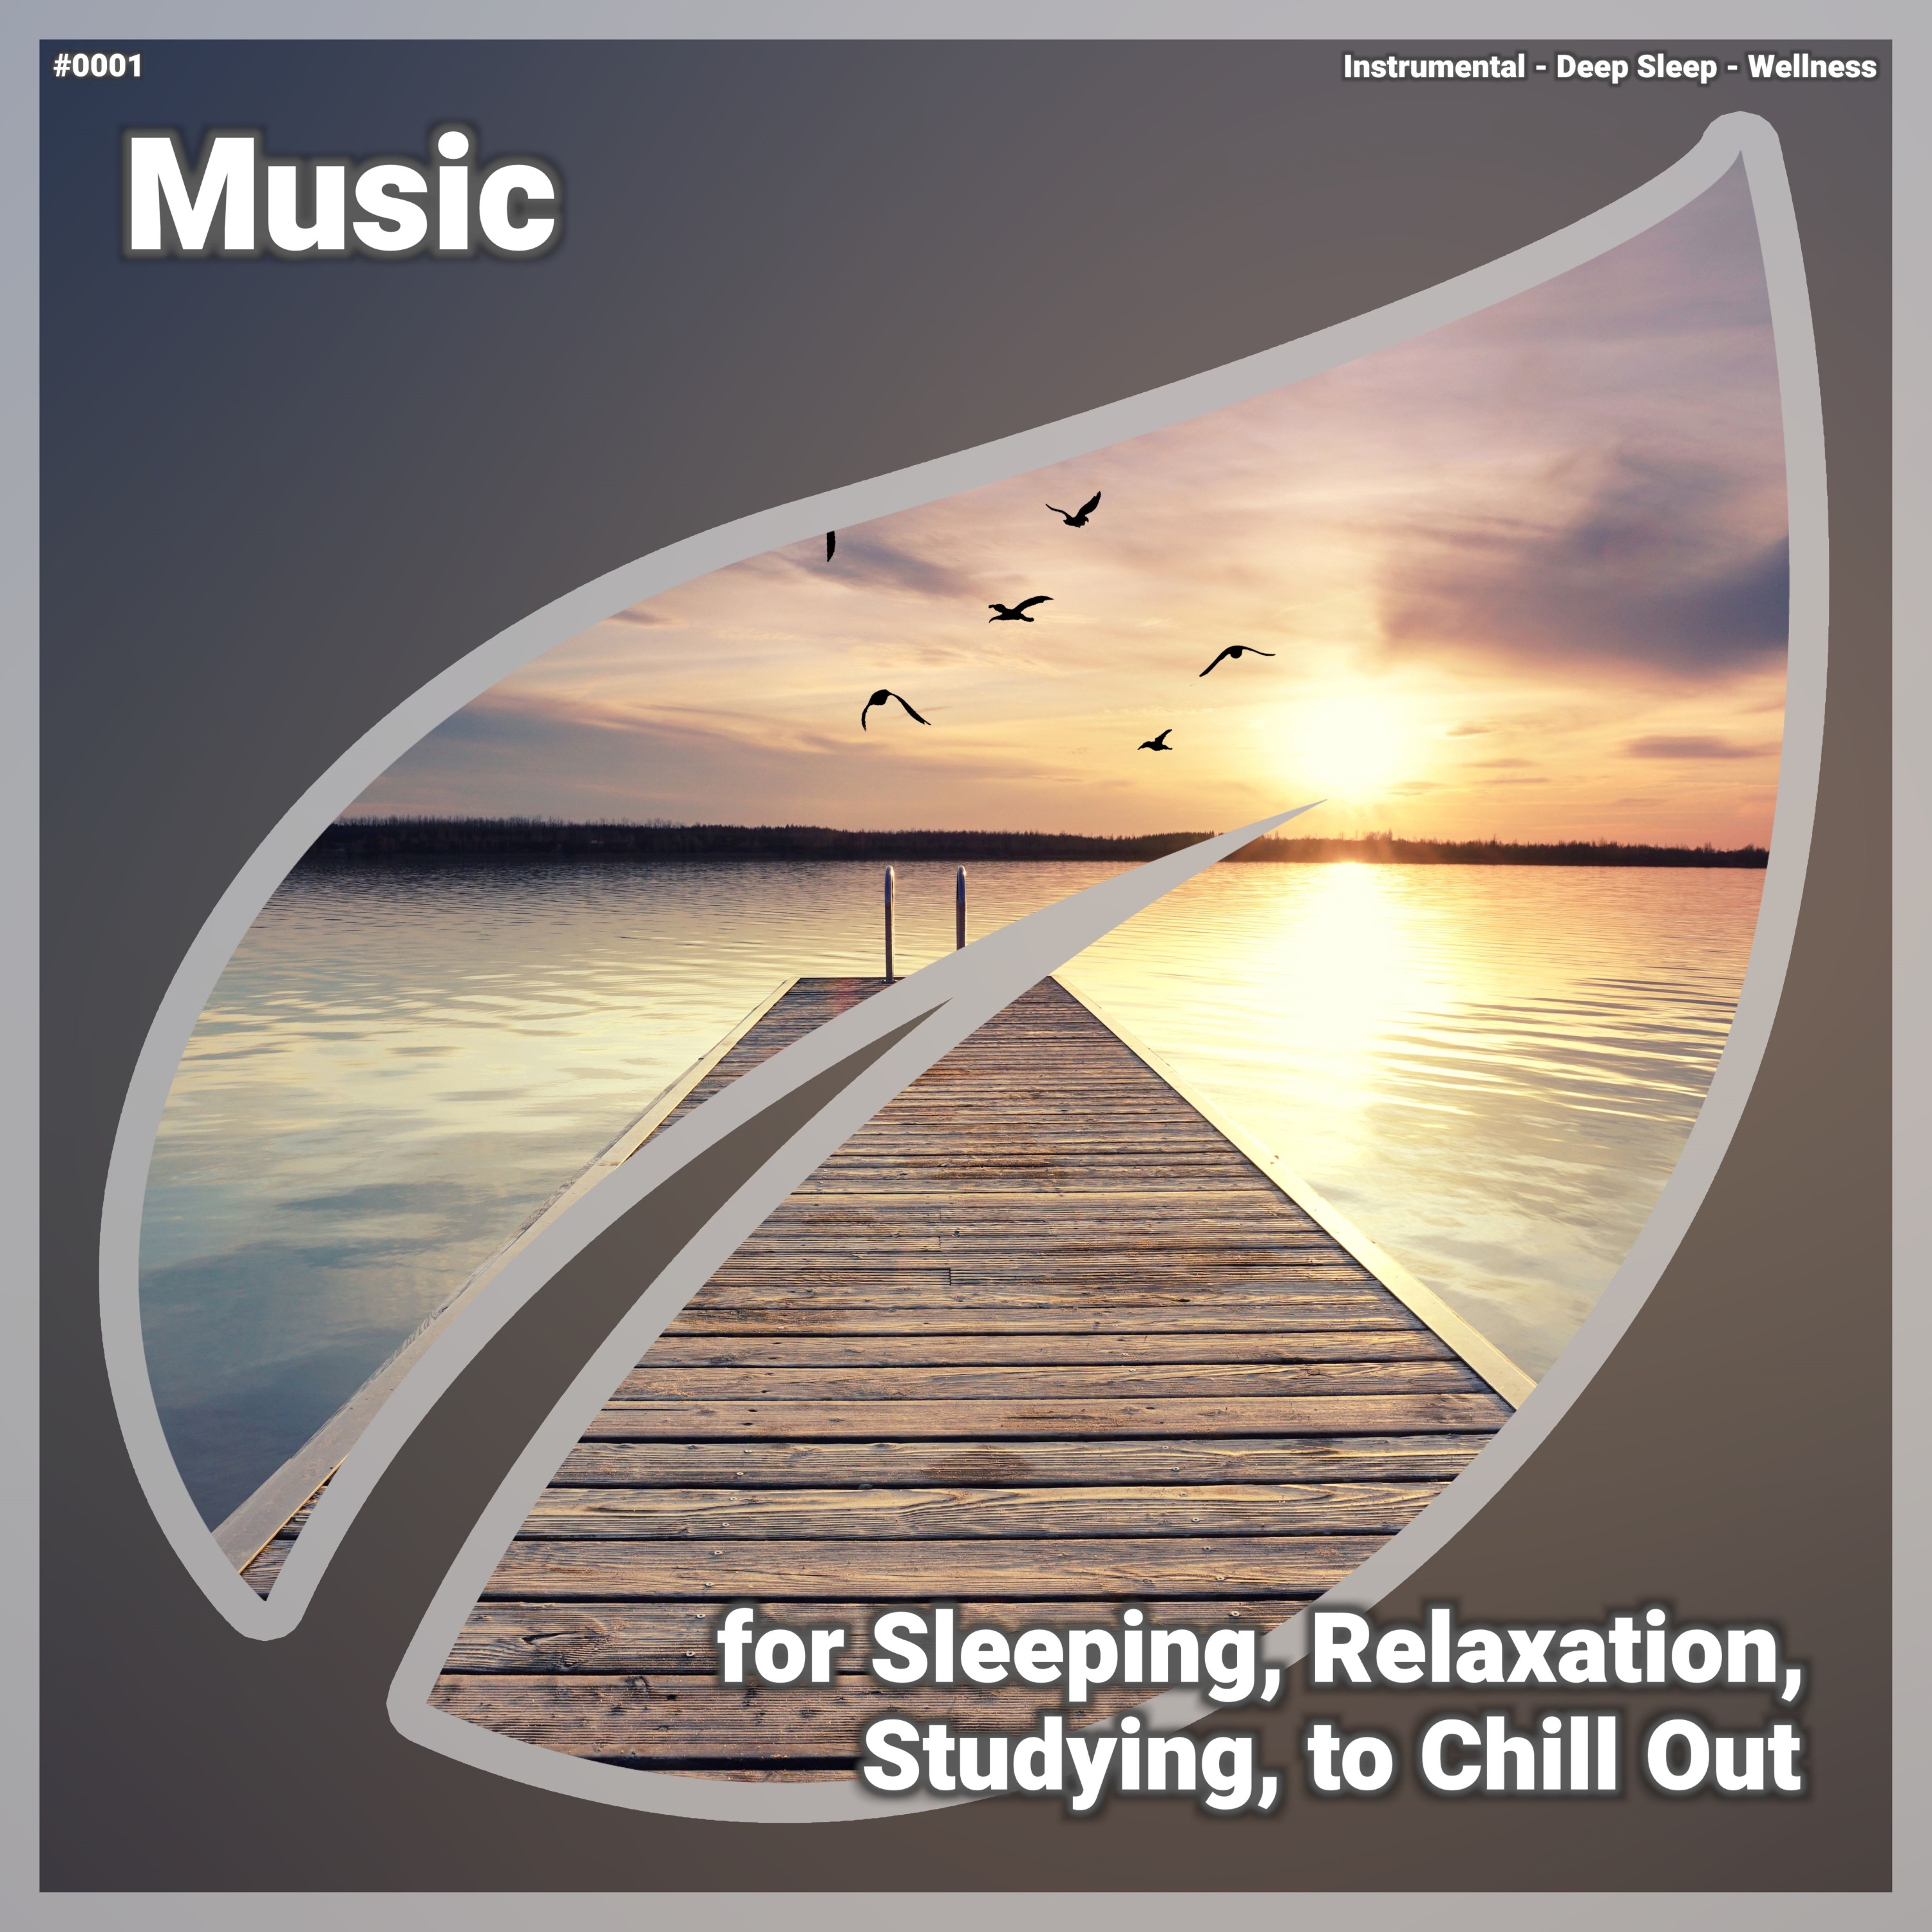 डाउनलोड करा Relaxing Music, Pt. 32